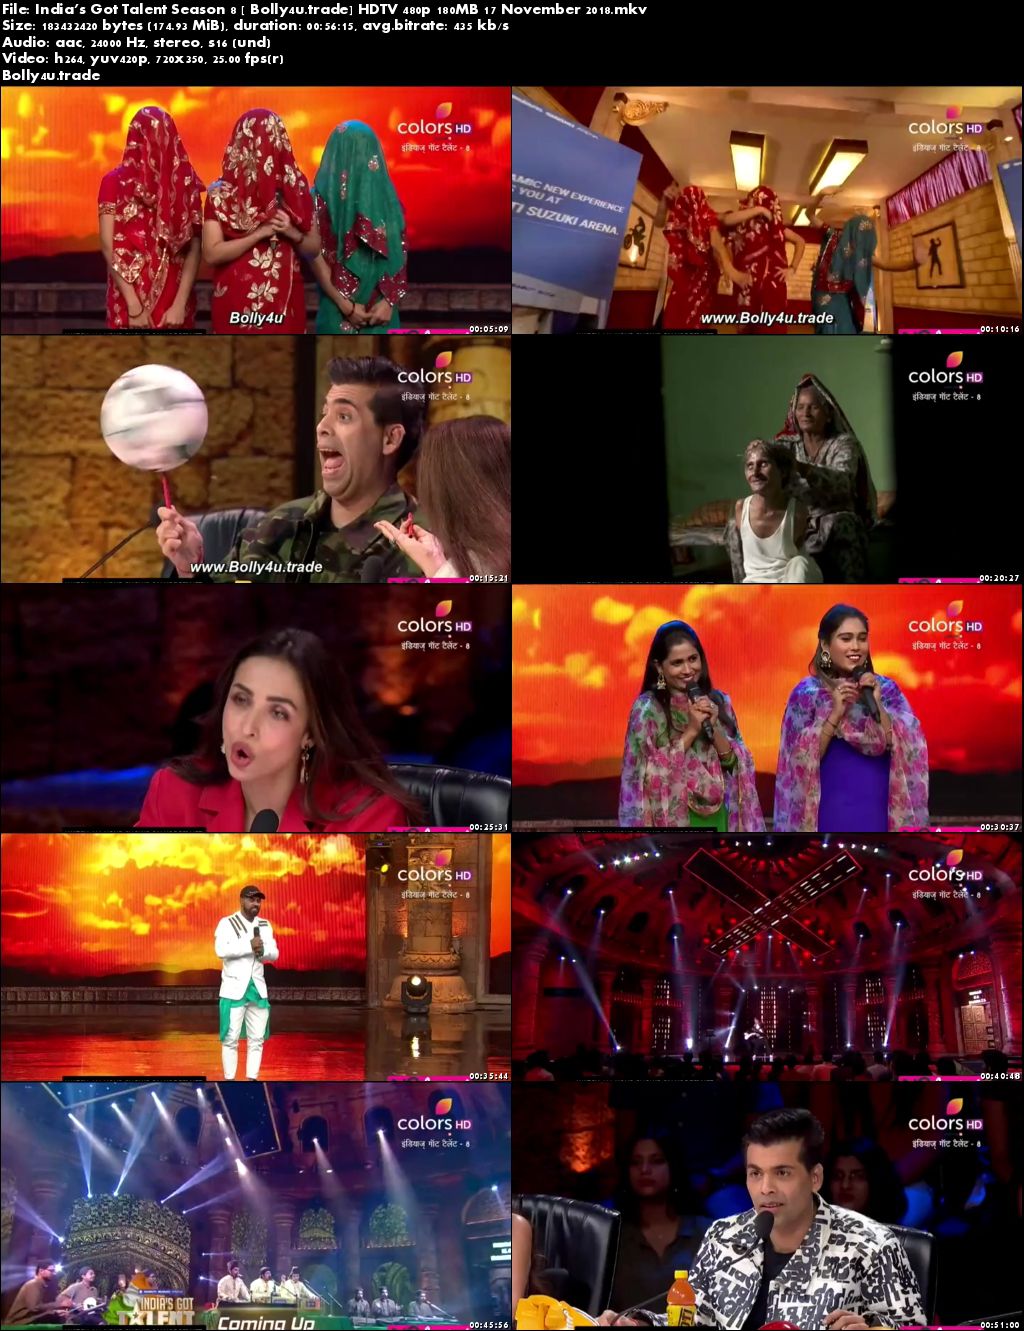 Indias Got Talent Season 8 HDTV 480p 180MB 17 November 2018 Download